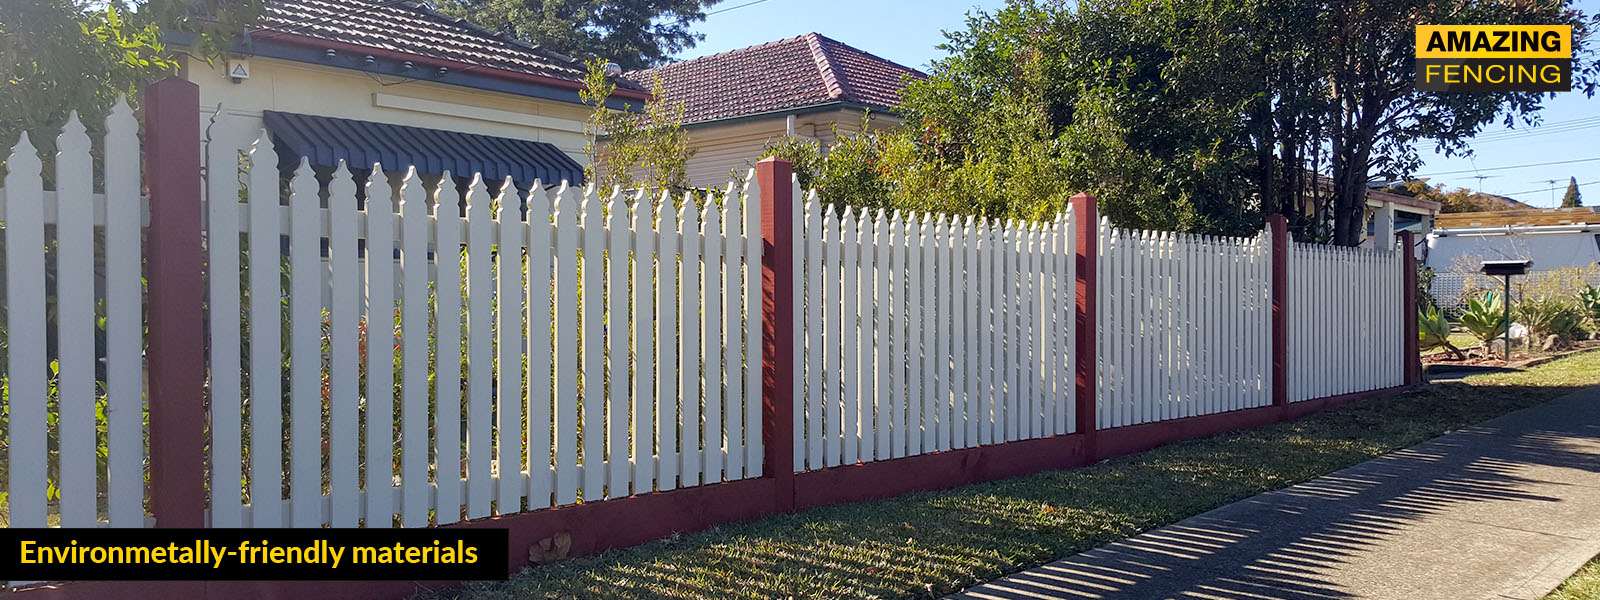 Environmentally friendly fence materials